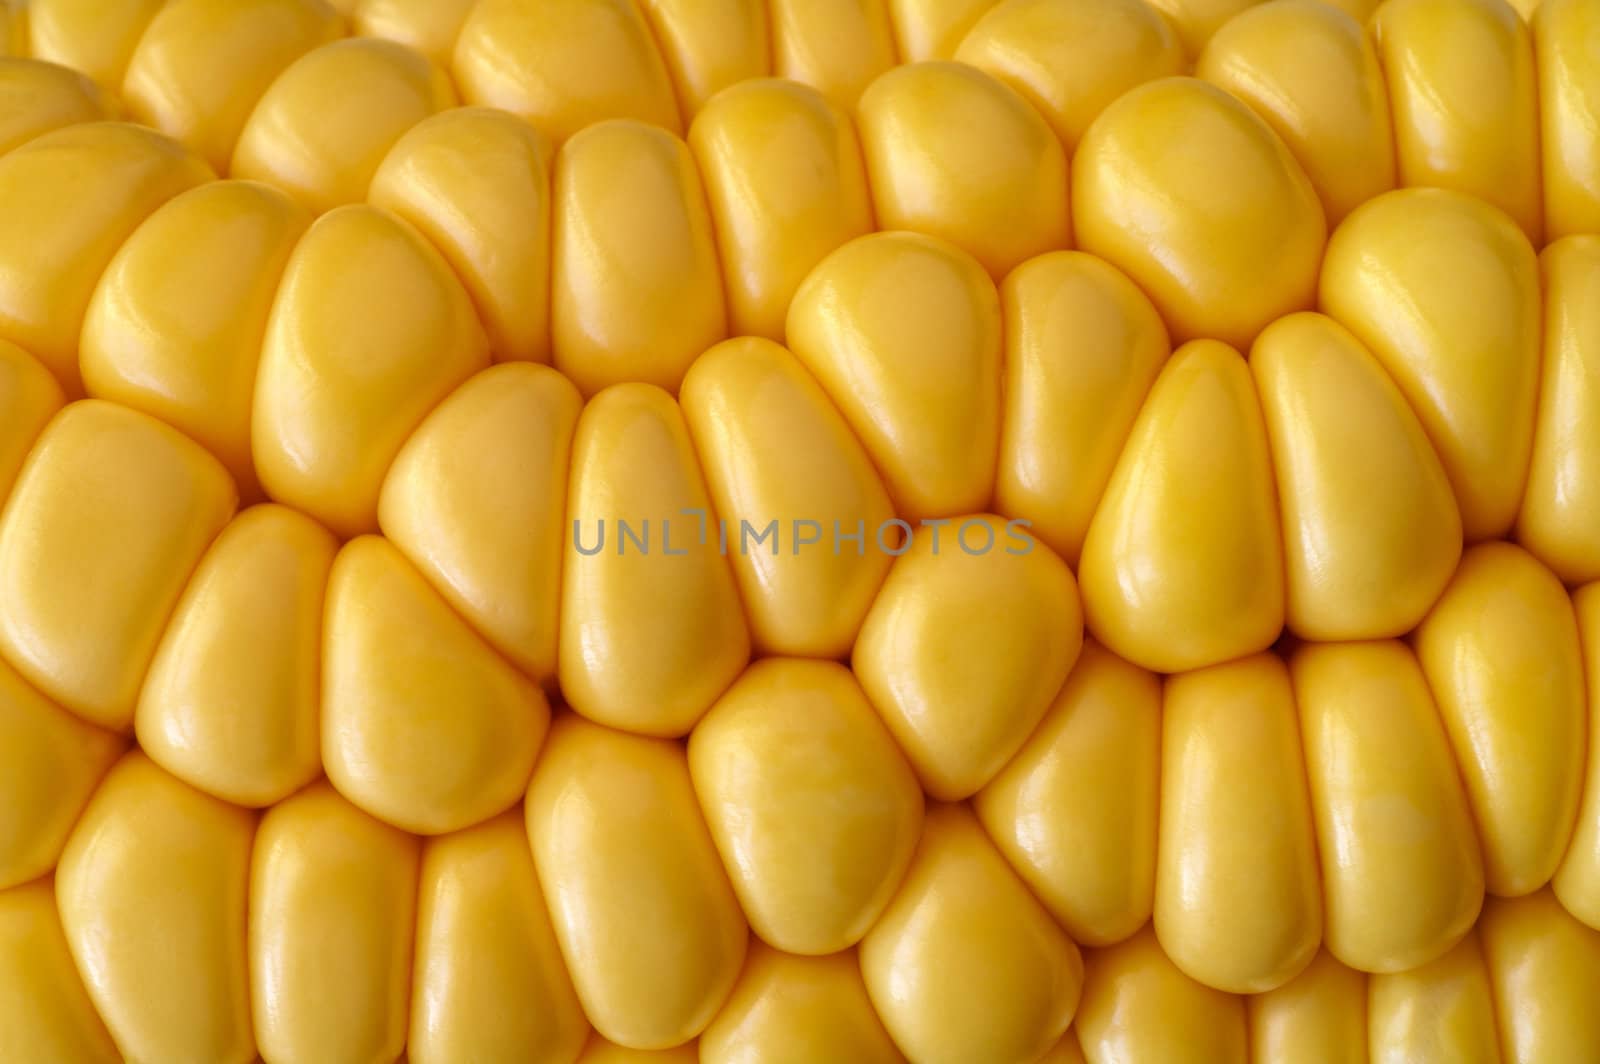 Corn cob closeup by Laborer